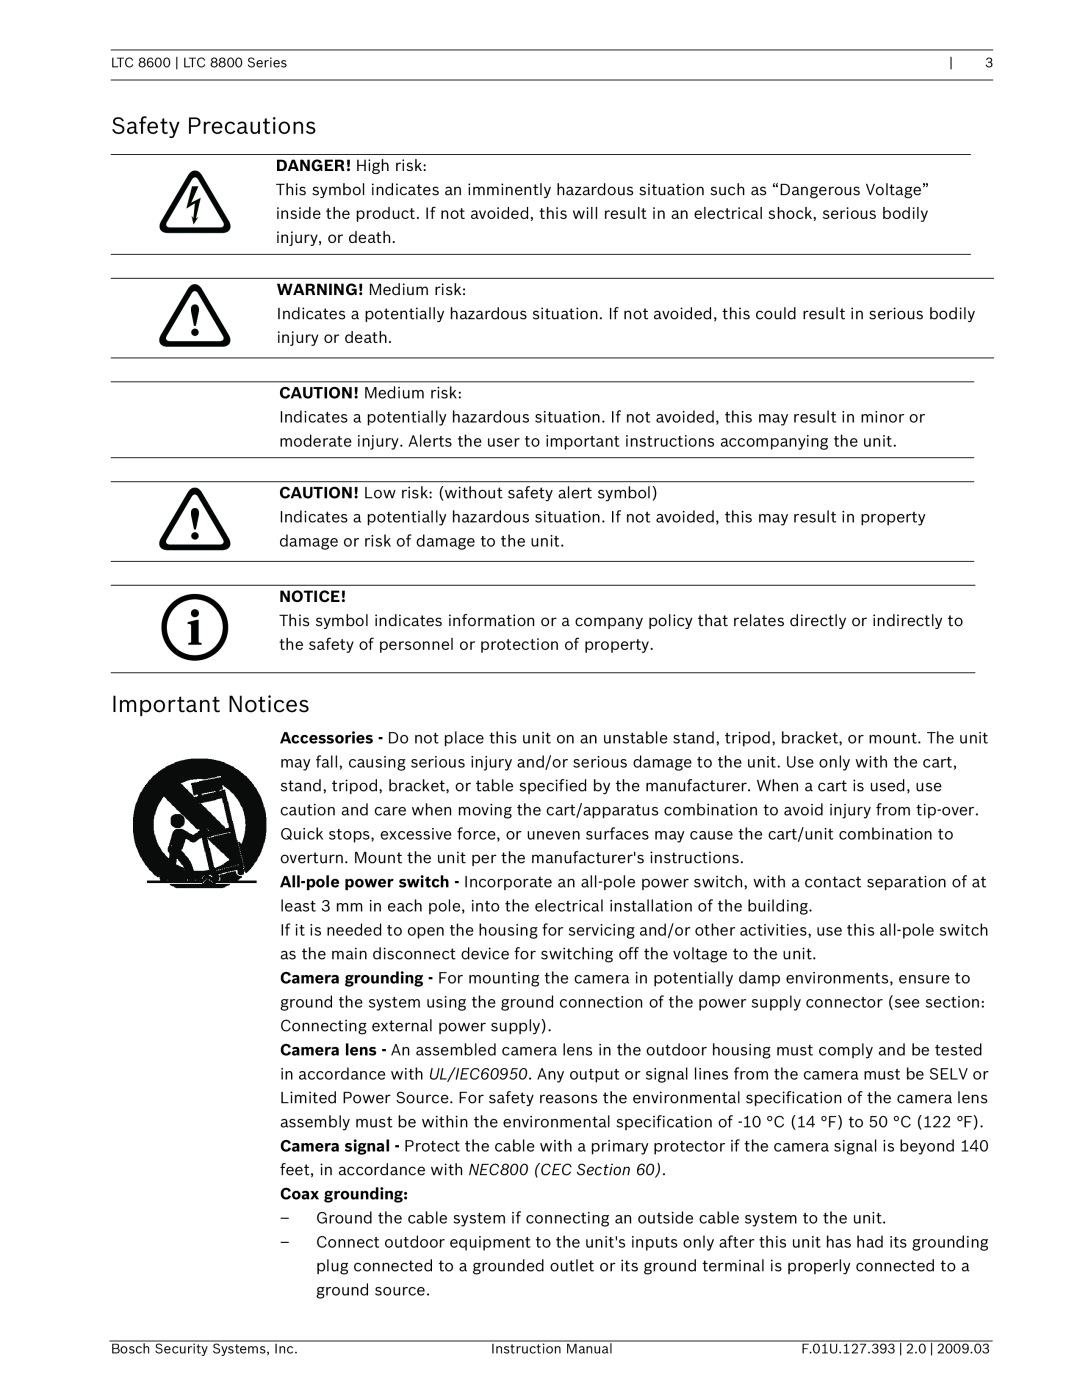 Bosch Appliances LTC 8800, LTC 8600 instruction manual Safety Precautions, Important Notices, Coax grounding 